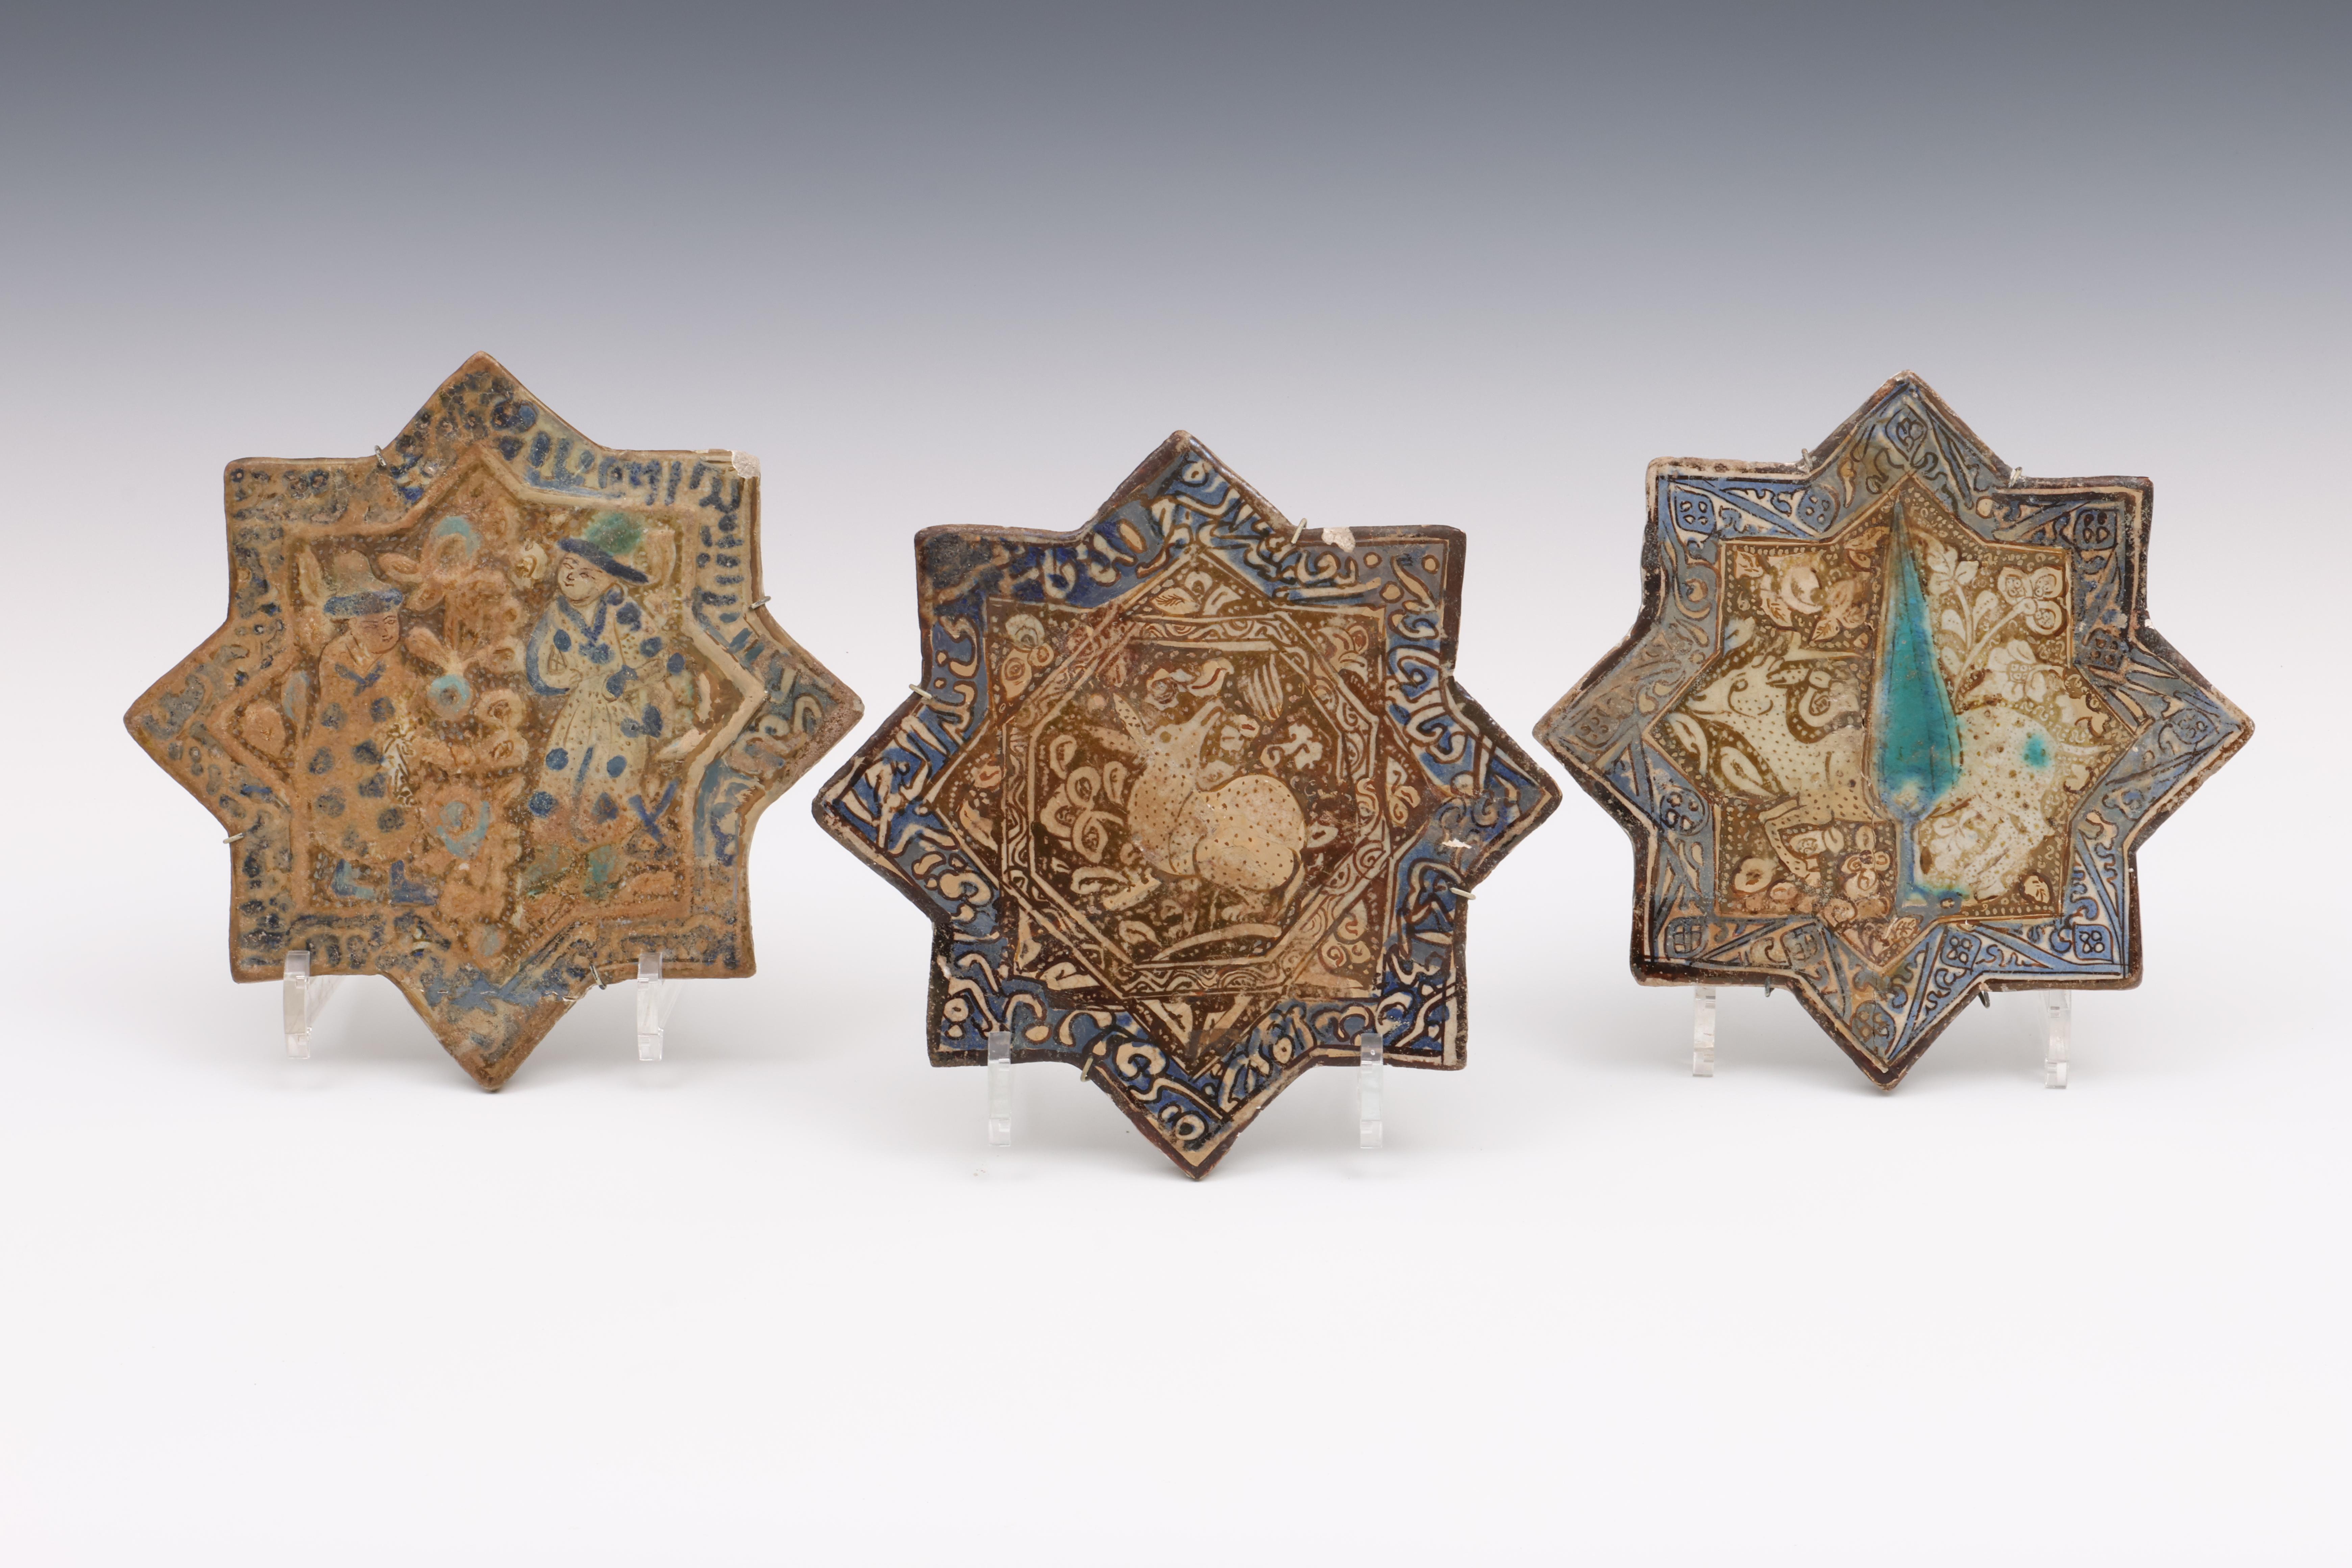 Persia, three star shaped tiles, ca. 15th-17th century